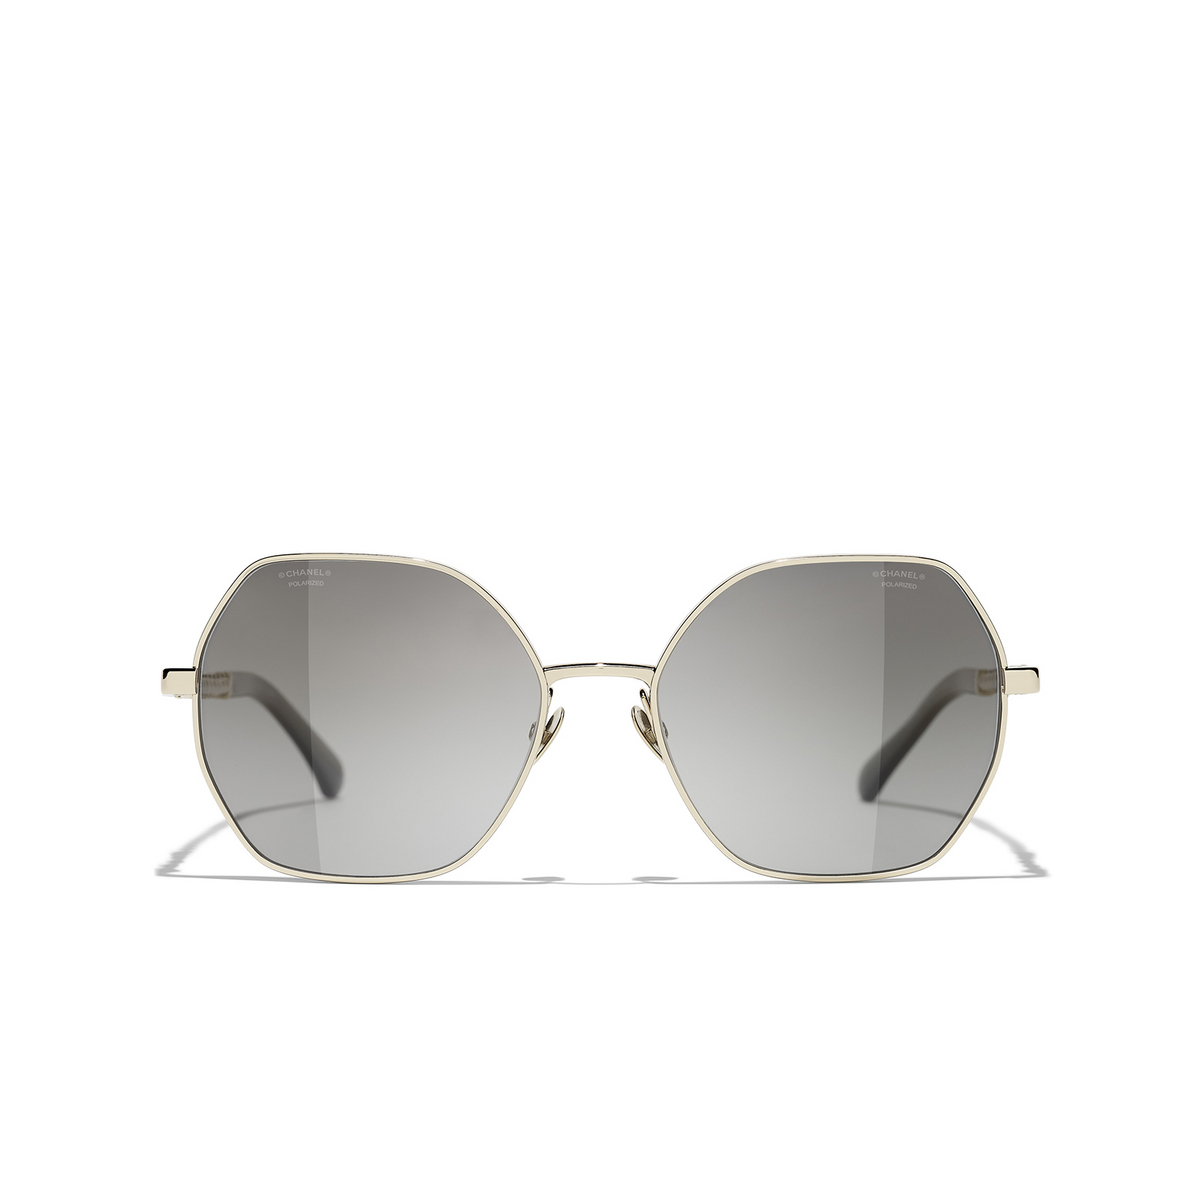 CHANEL square Sunglasses C395M3 Gold & Black - front view